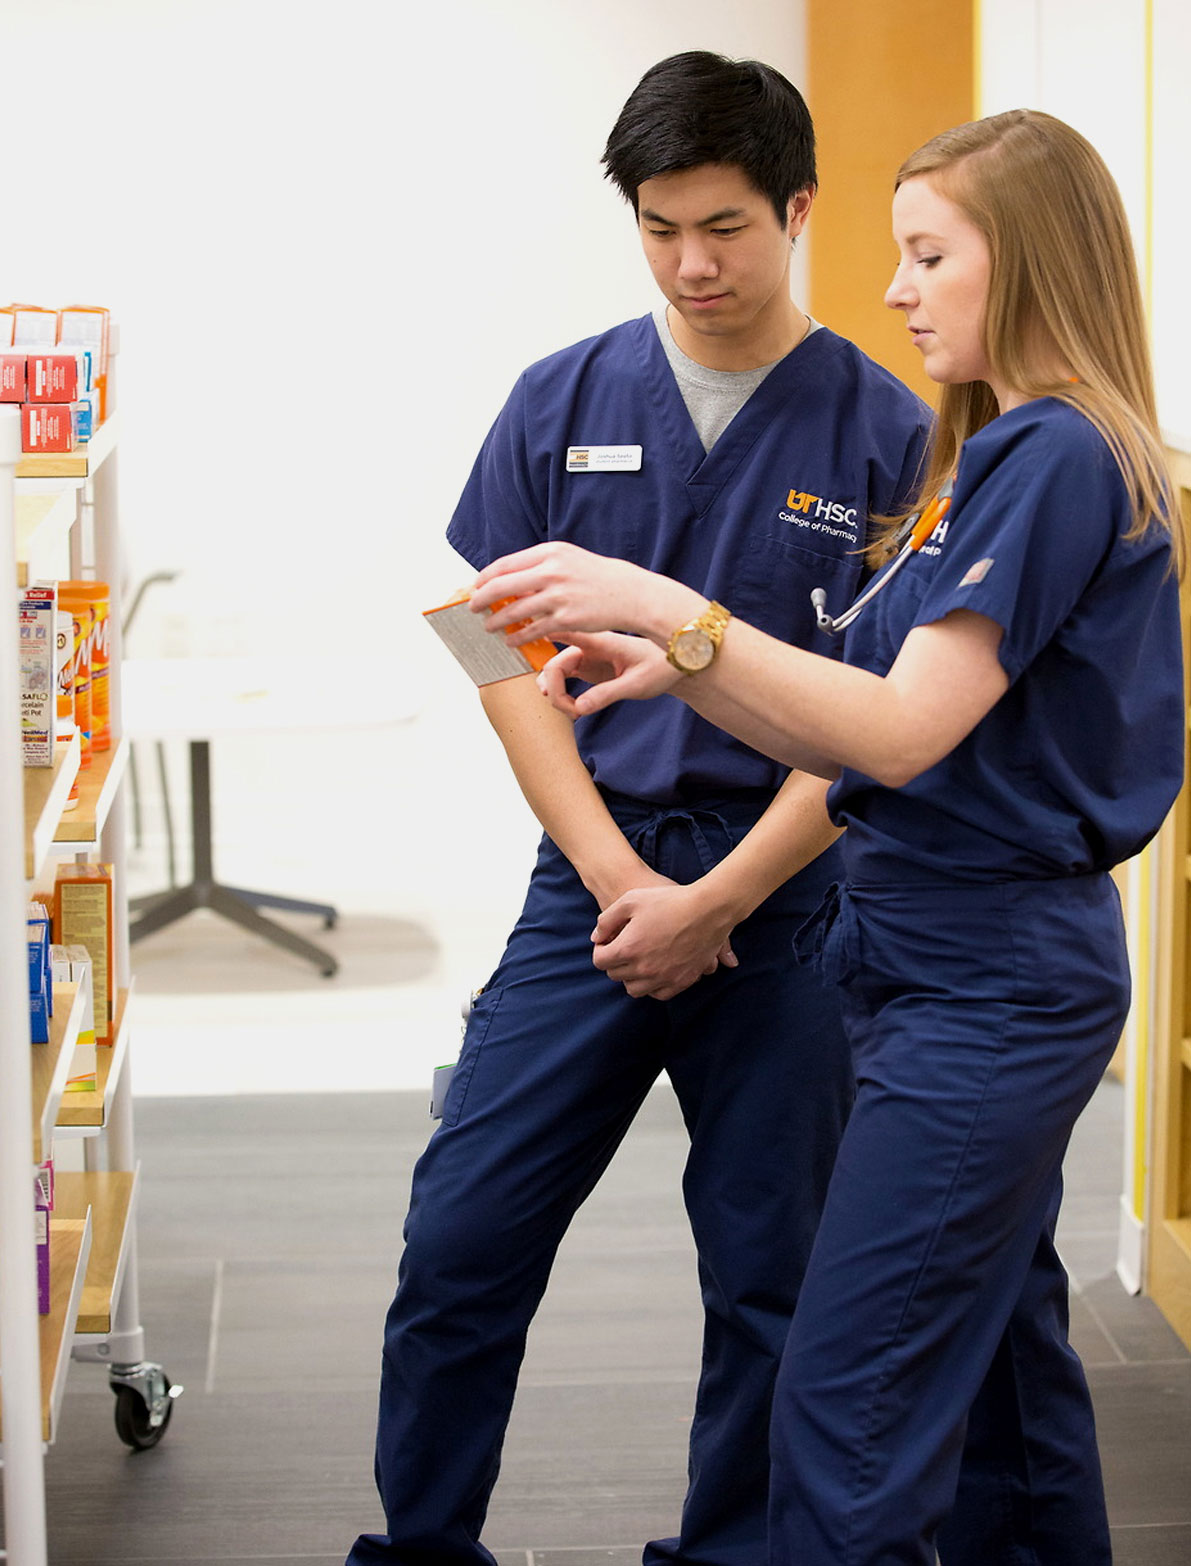 UT pharmacy students inspect medication label